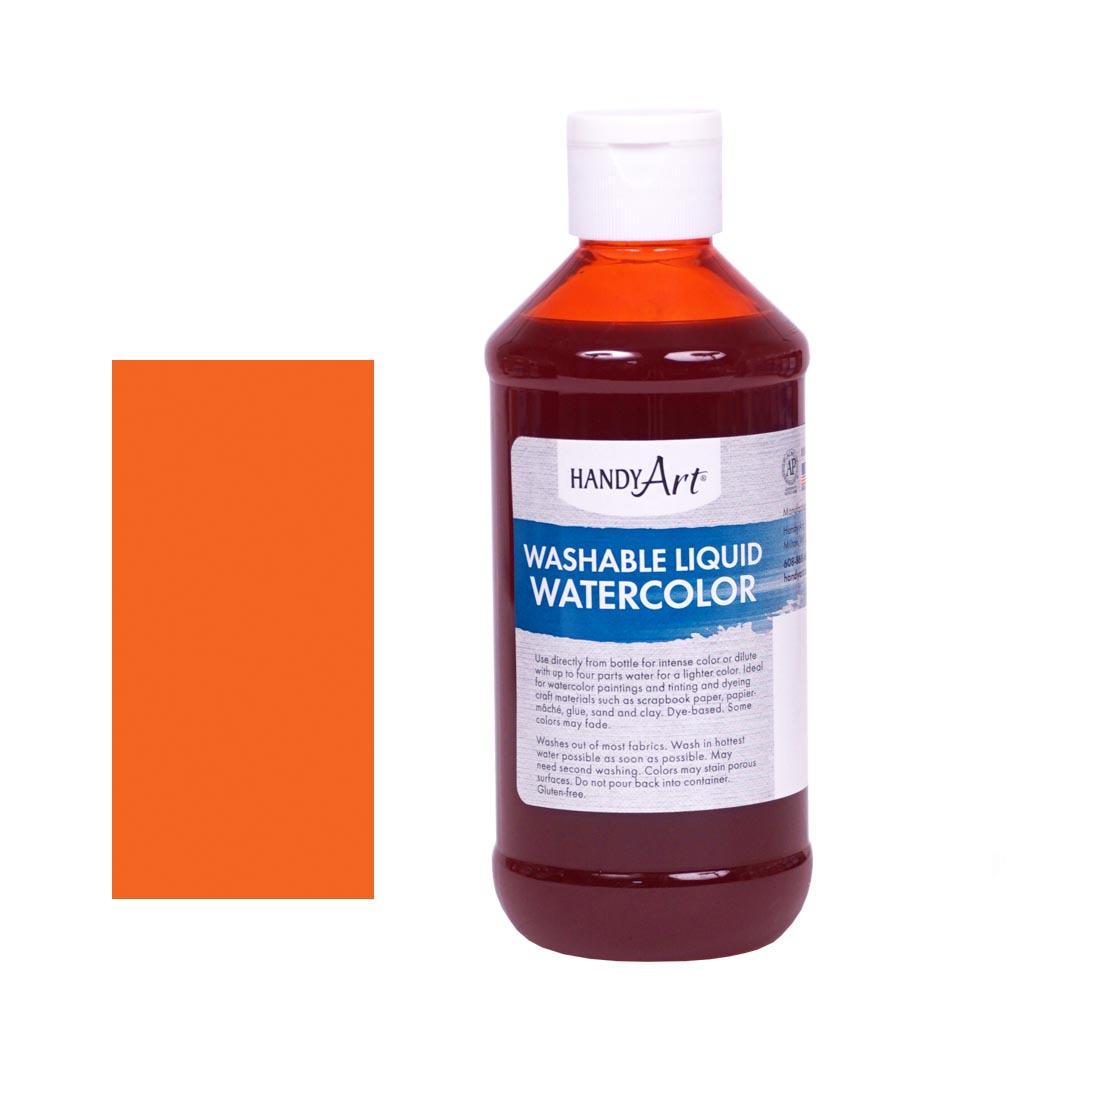 Bottle of Orange Handy Art Washable Liquid Watercolor beside a rectangular color swatch